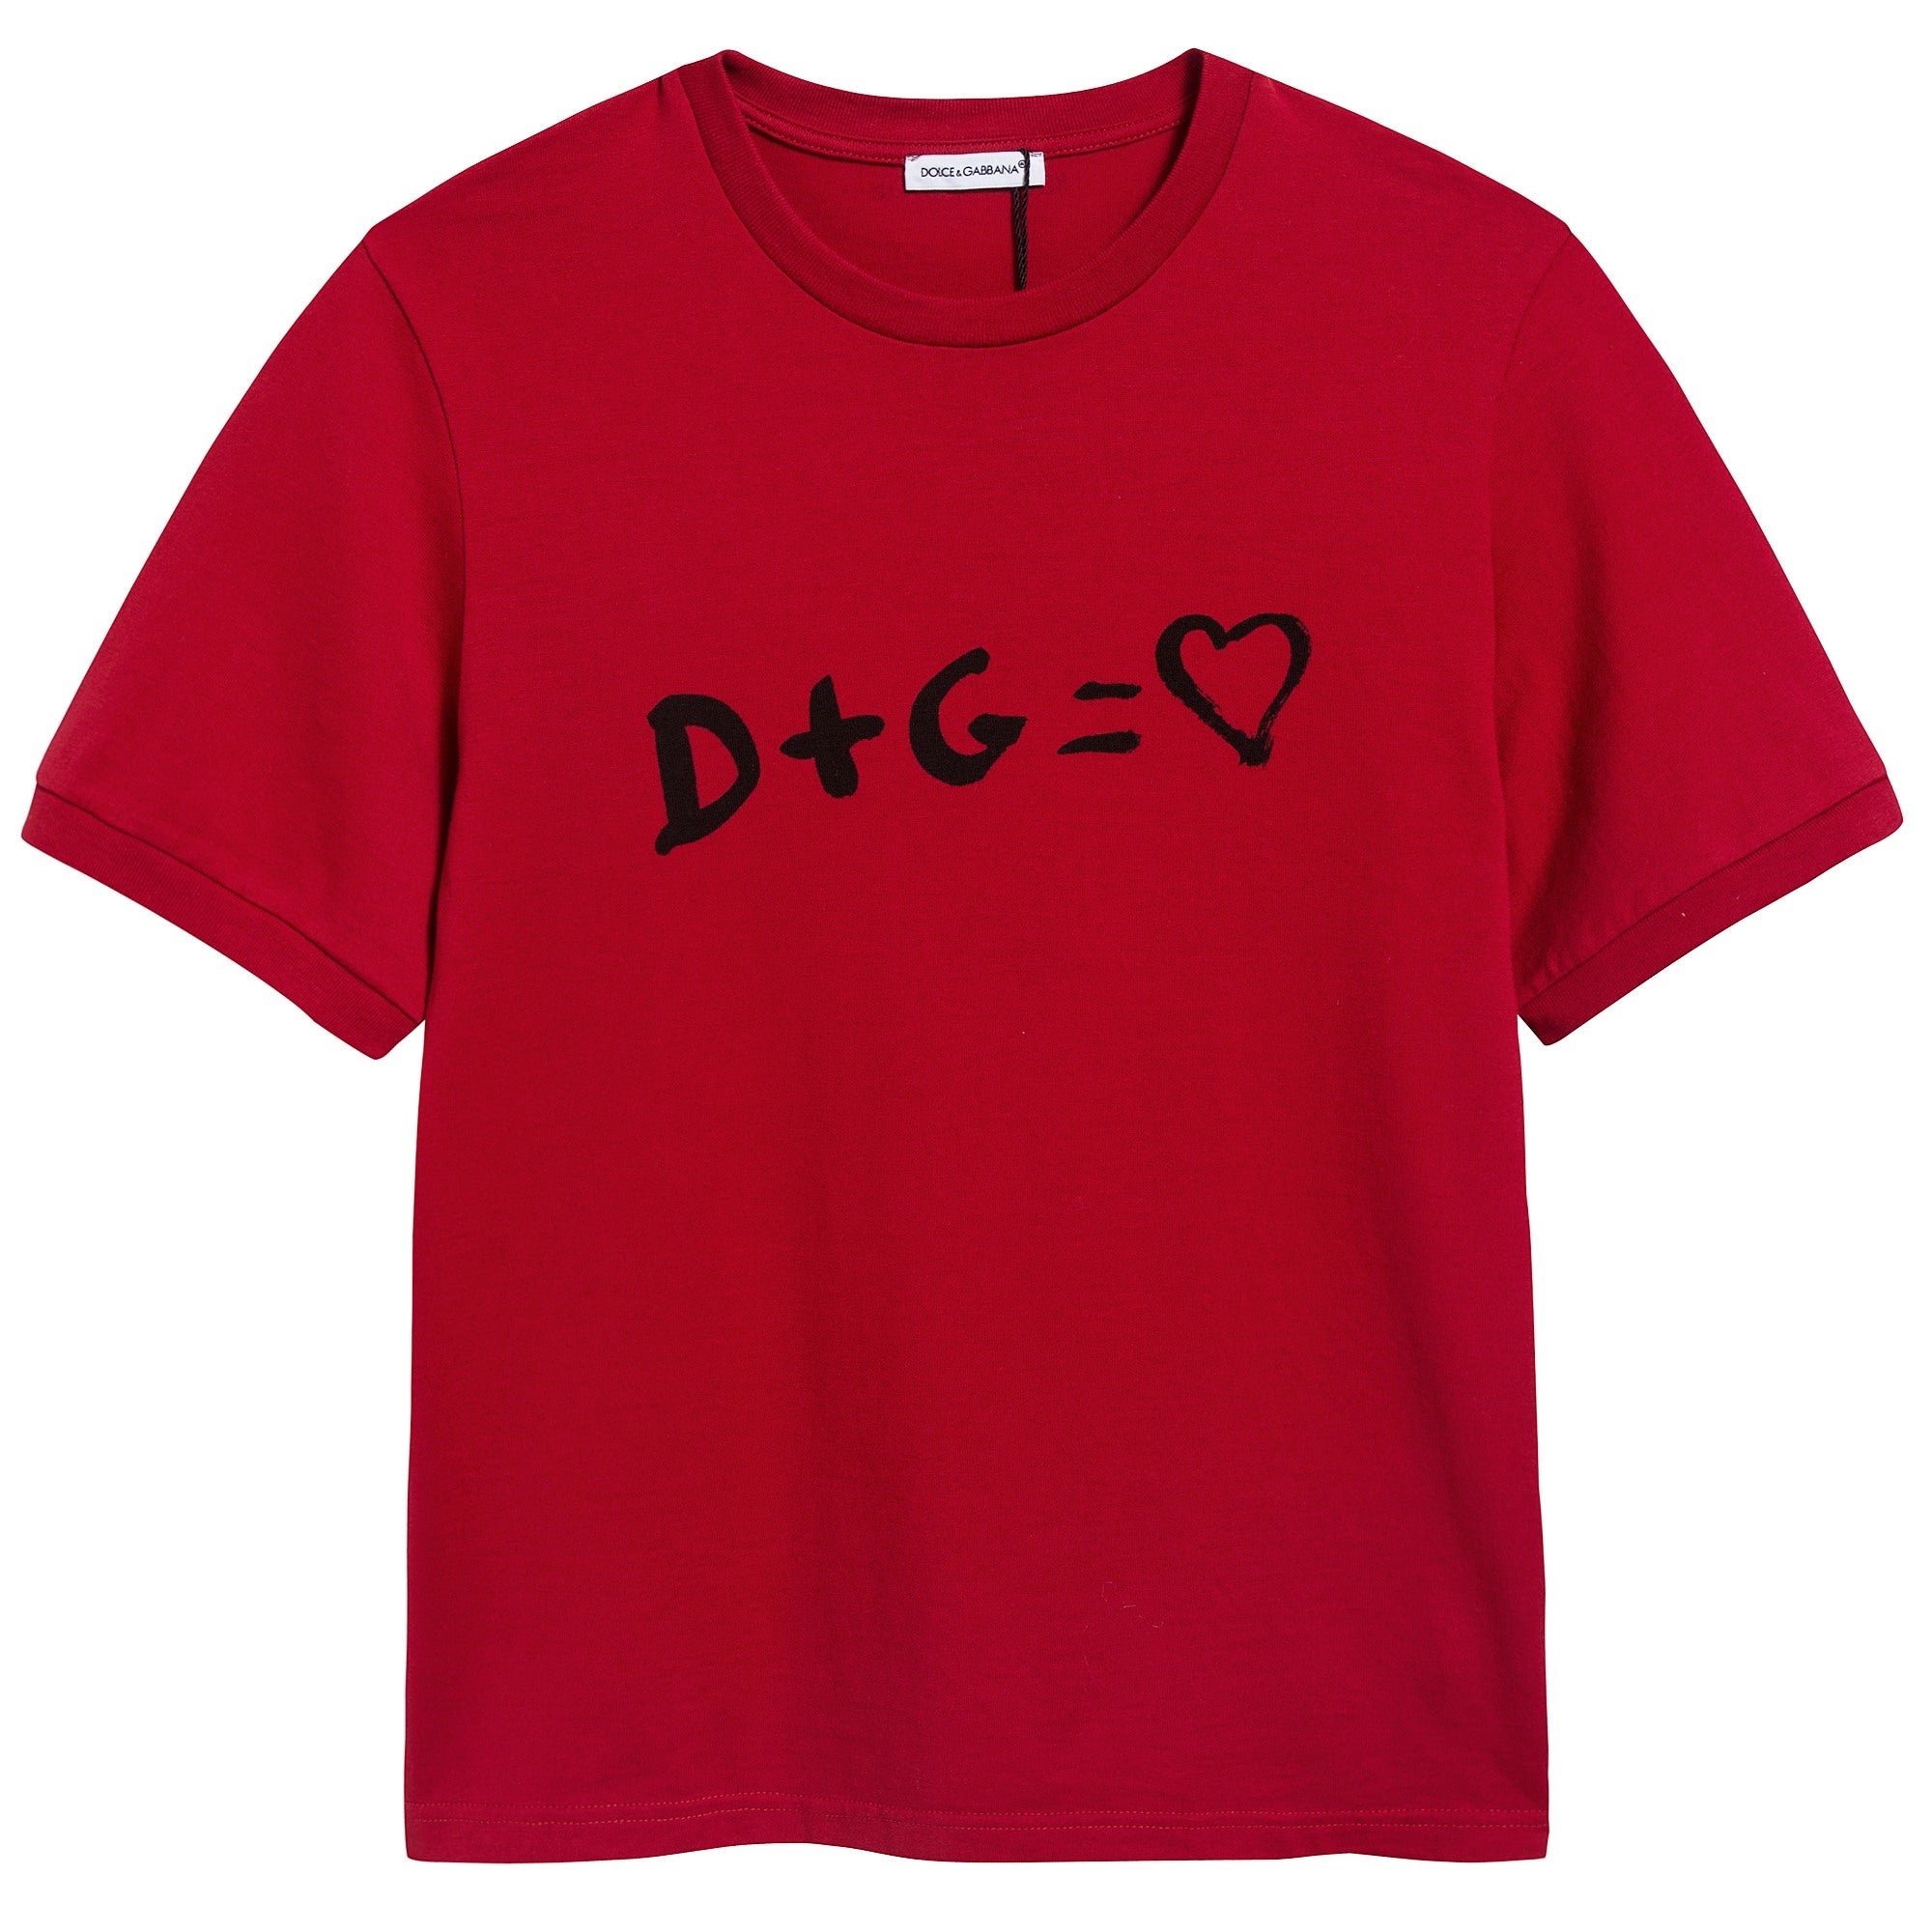 Girls Red "DG & Love" Cotton T-shirt